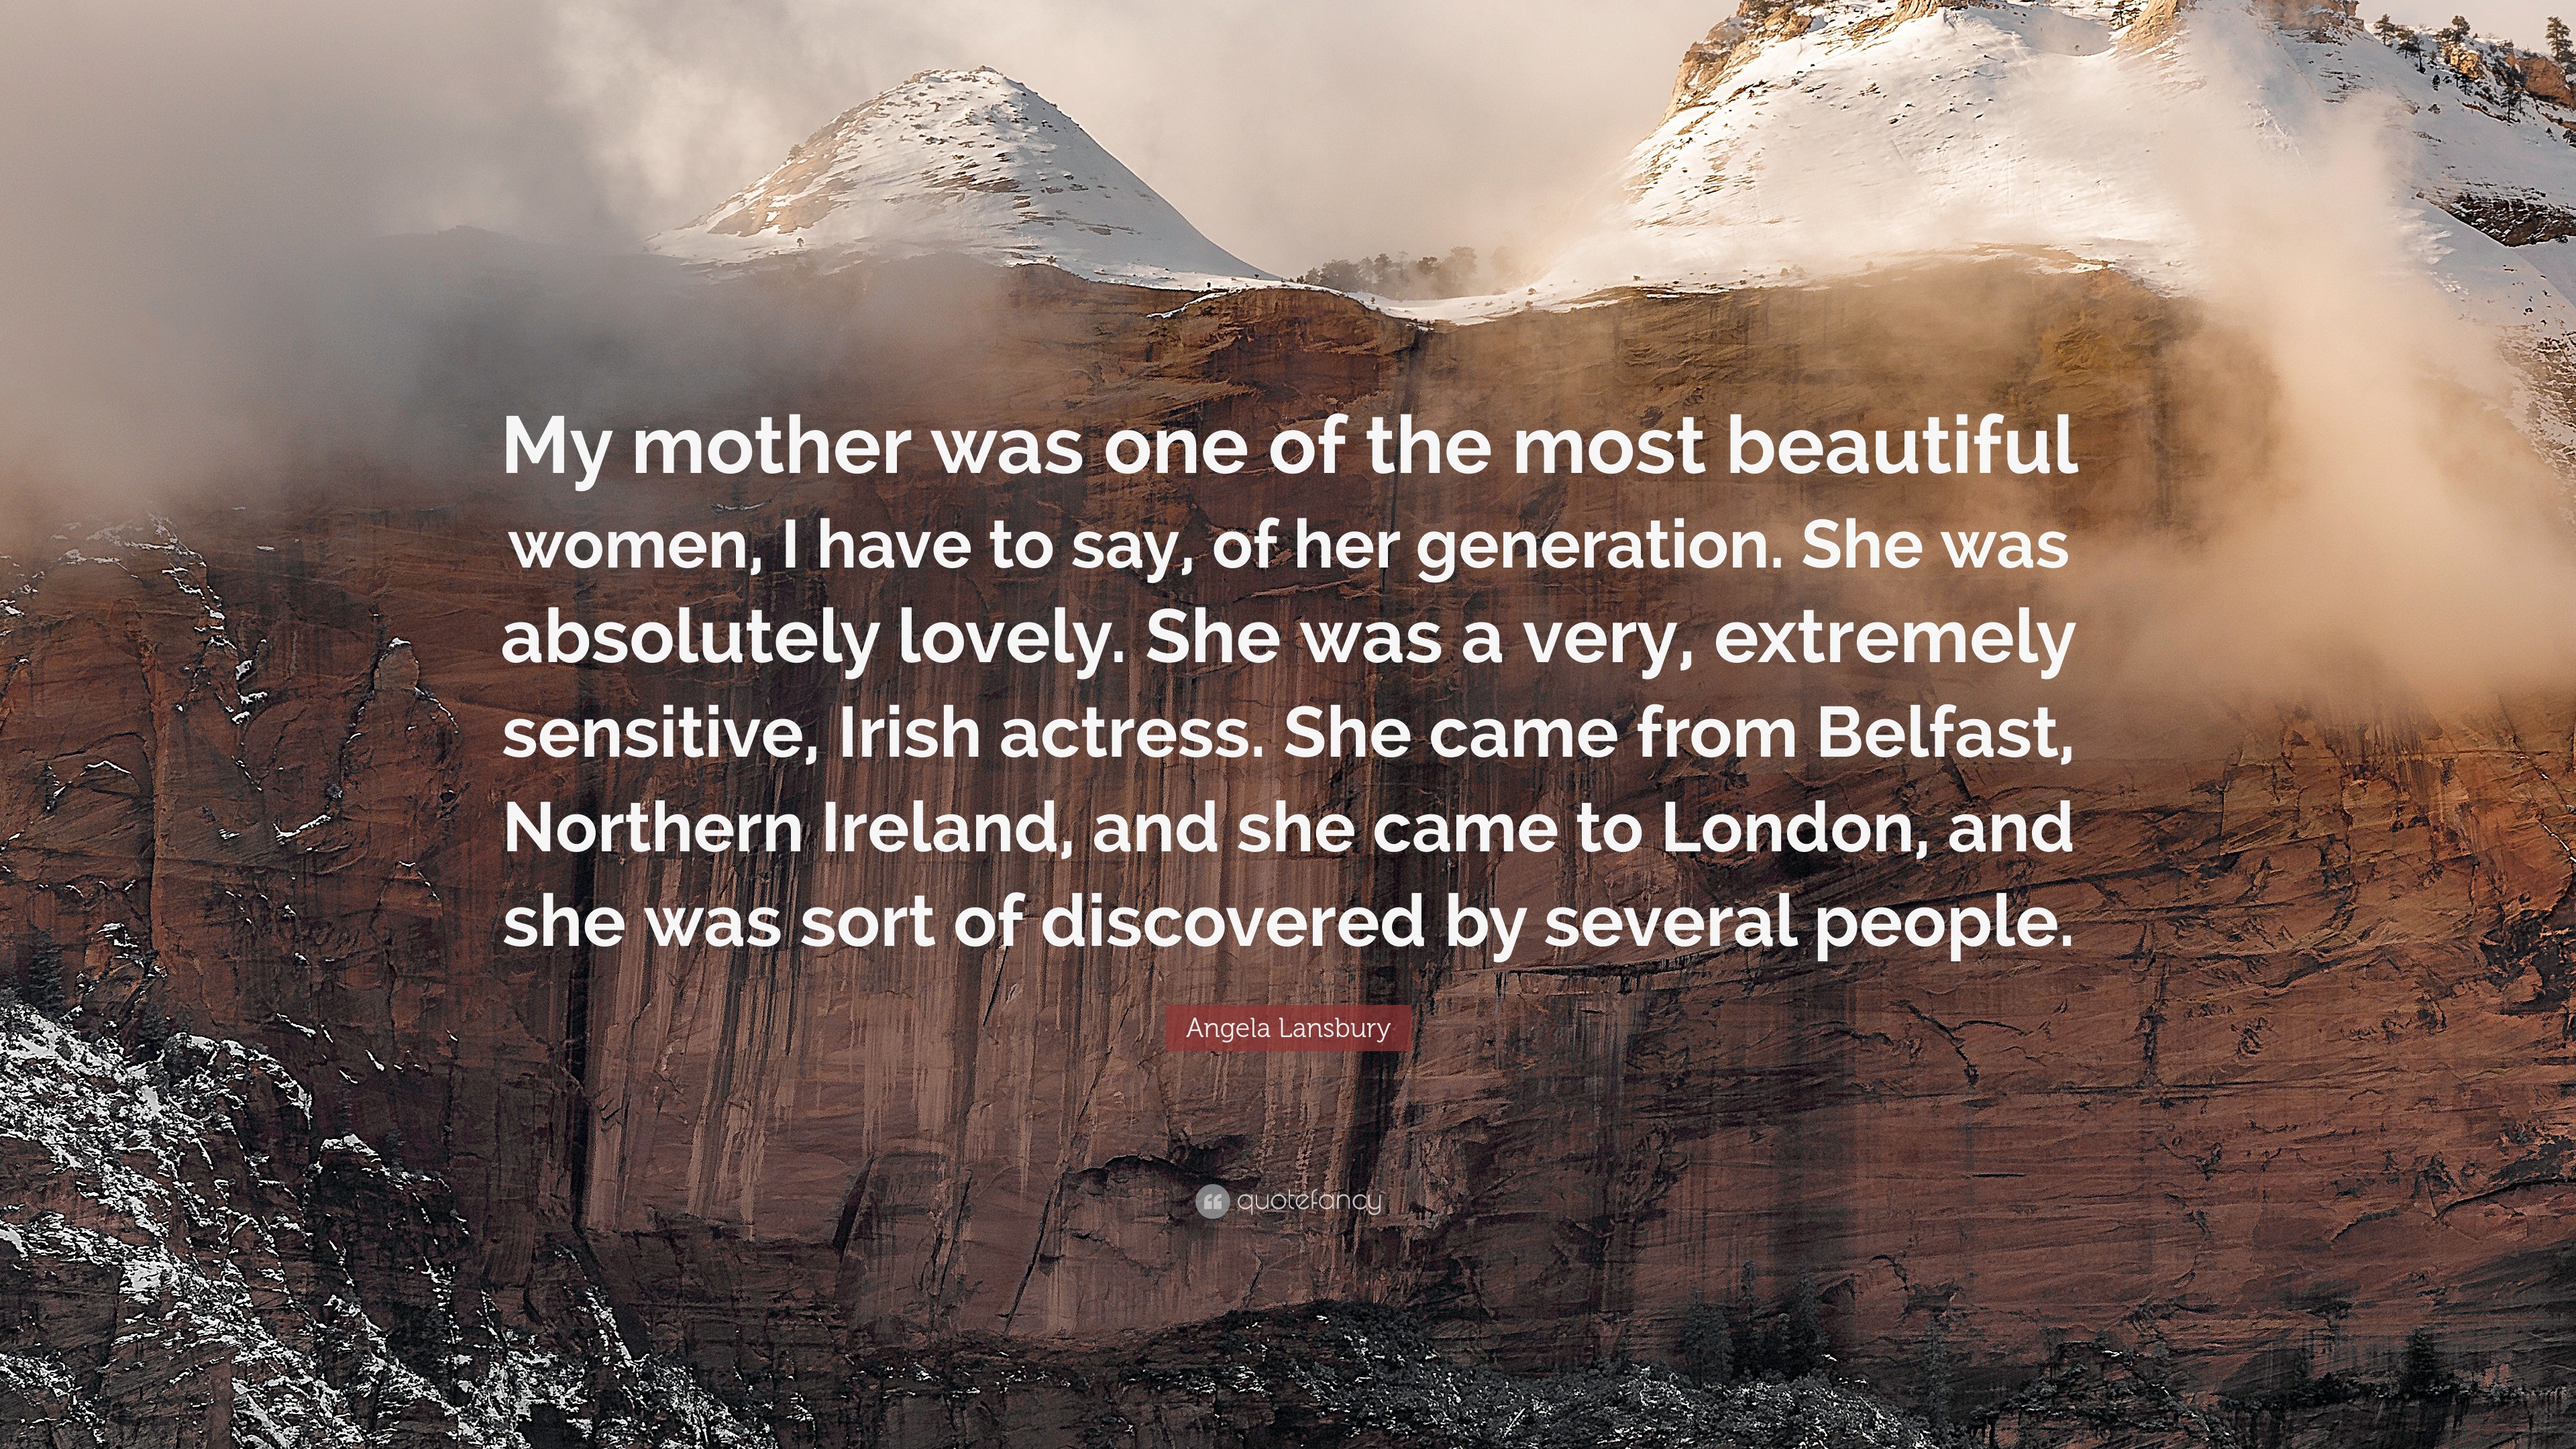 irish woman quotes